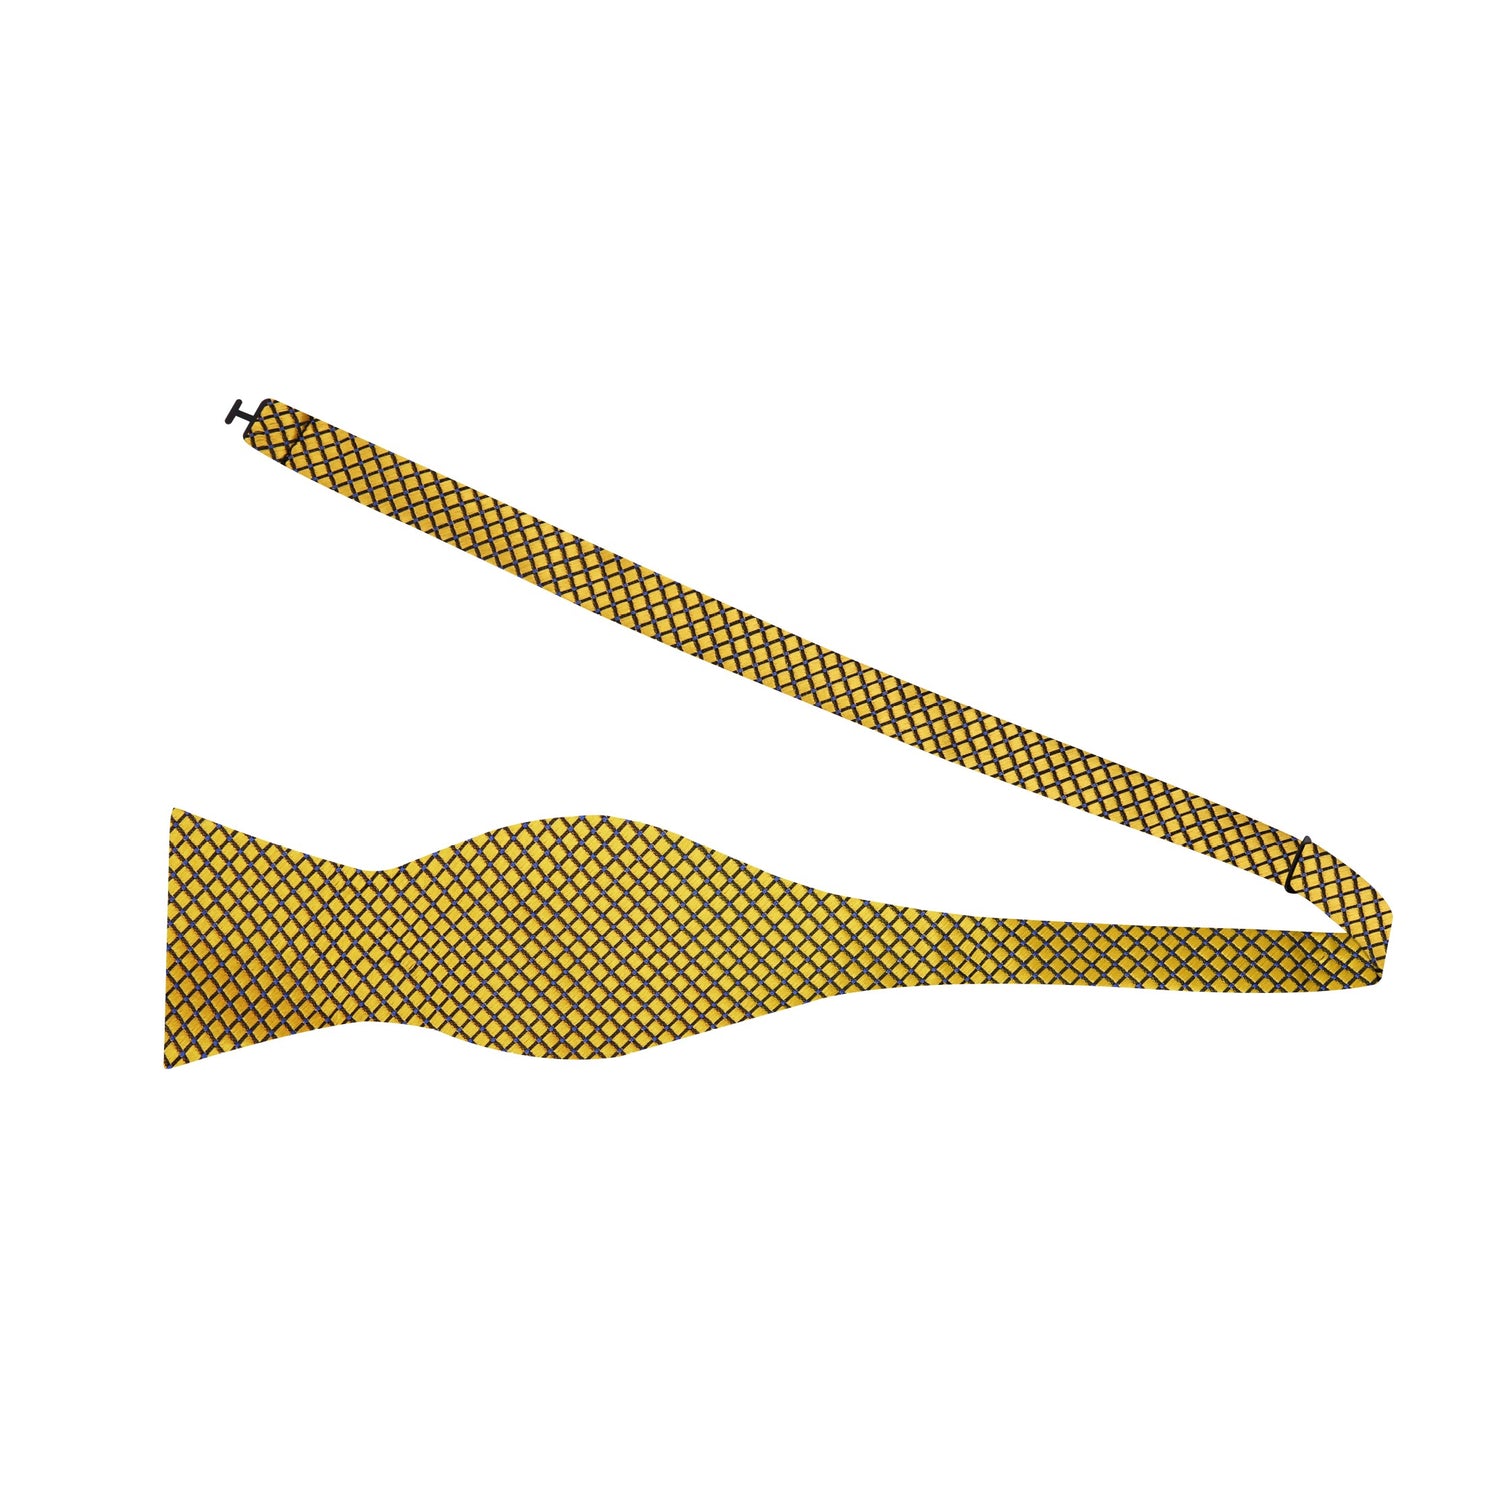 Self Tie: A Gold Small Geometric Diamond With Small Dots Pattern Silk Self Tie Bow Tie